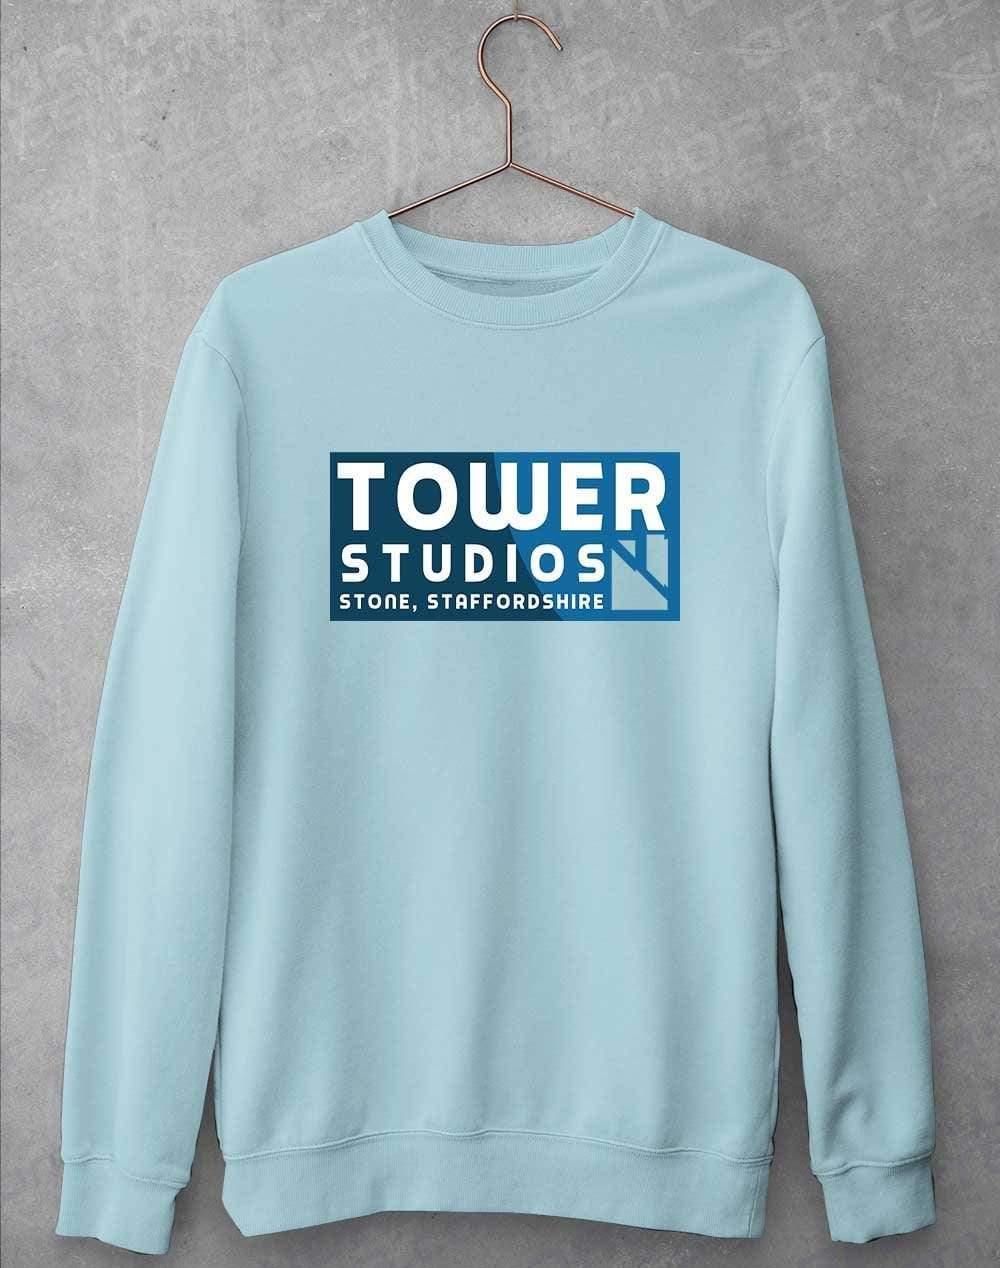 Tower Studios Cut Out Logo Sweatshirt S / Sky Blue  - Off World Tees